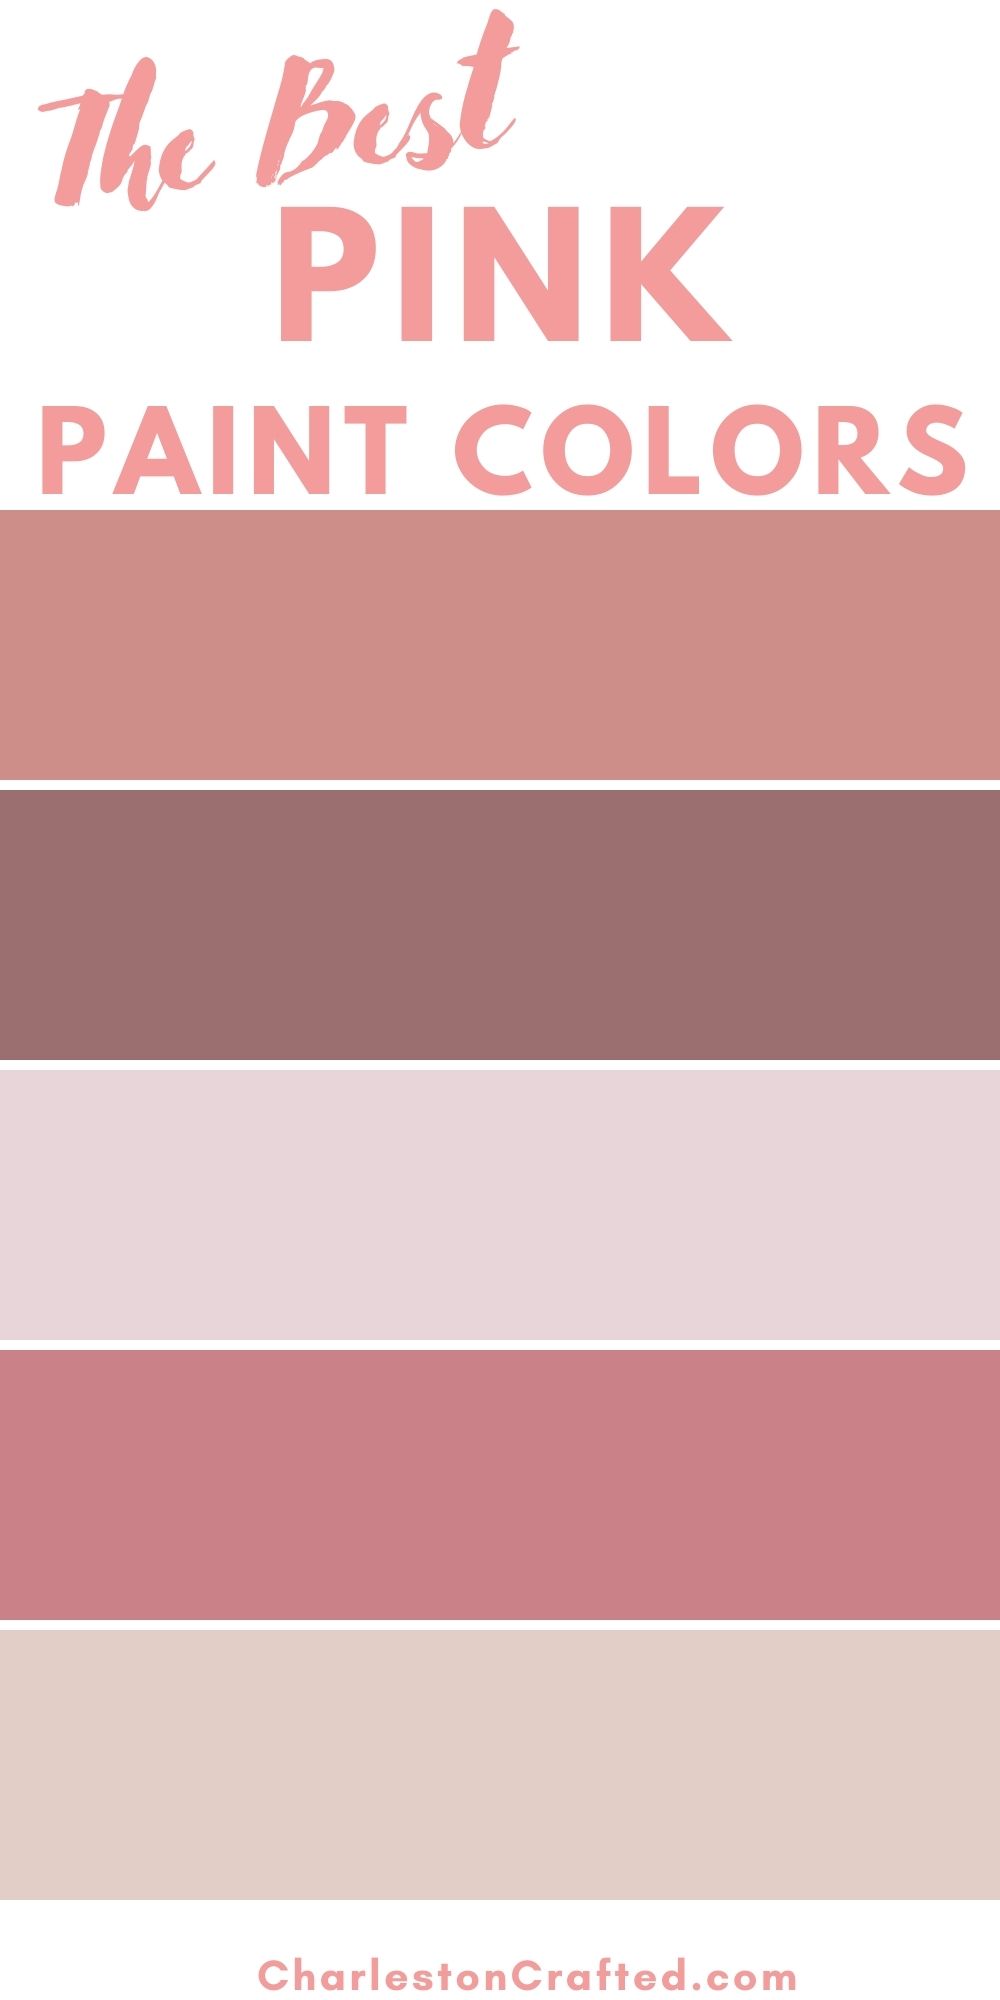 Rose Sakura vs Mauve Sylvestre, what's your favorite pink for